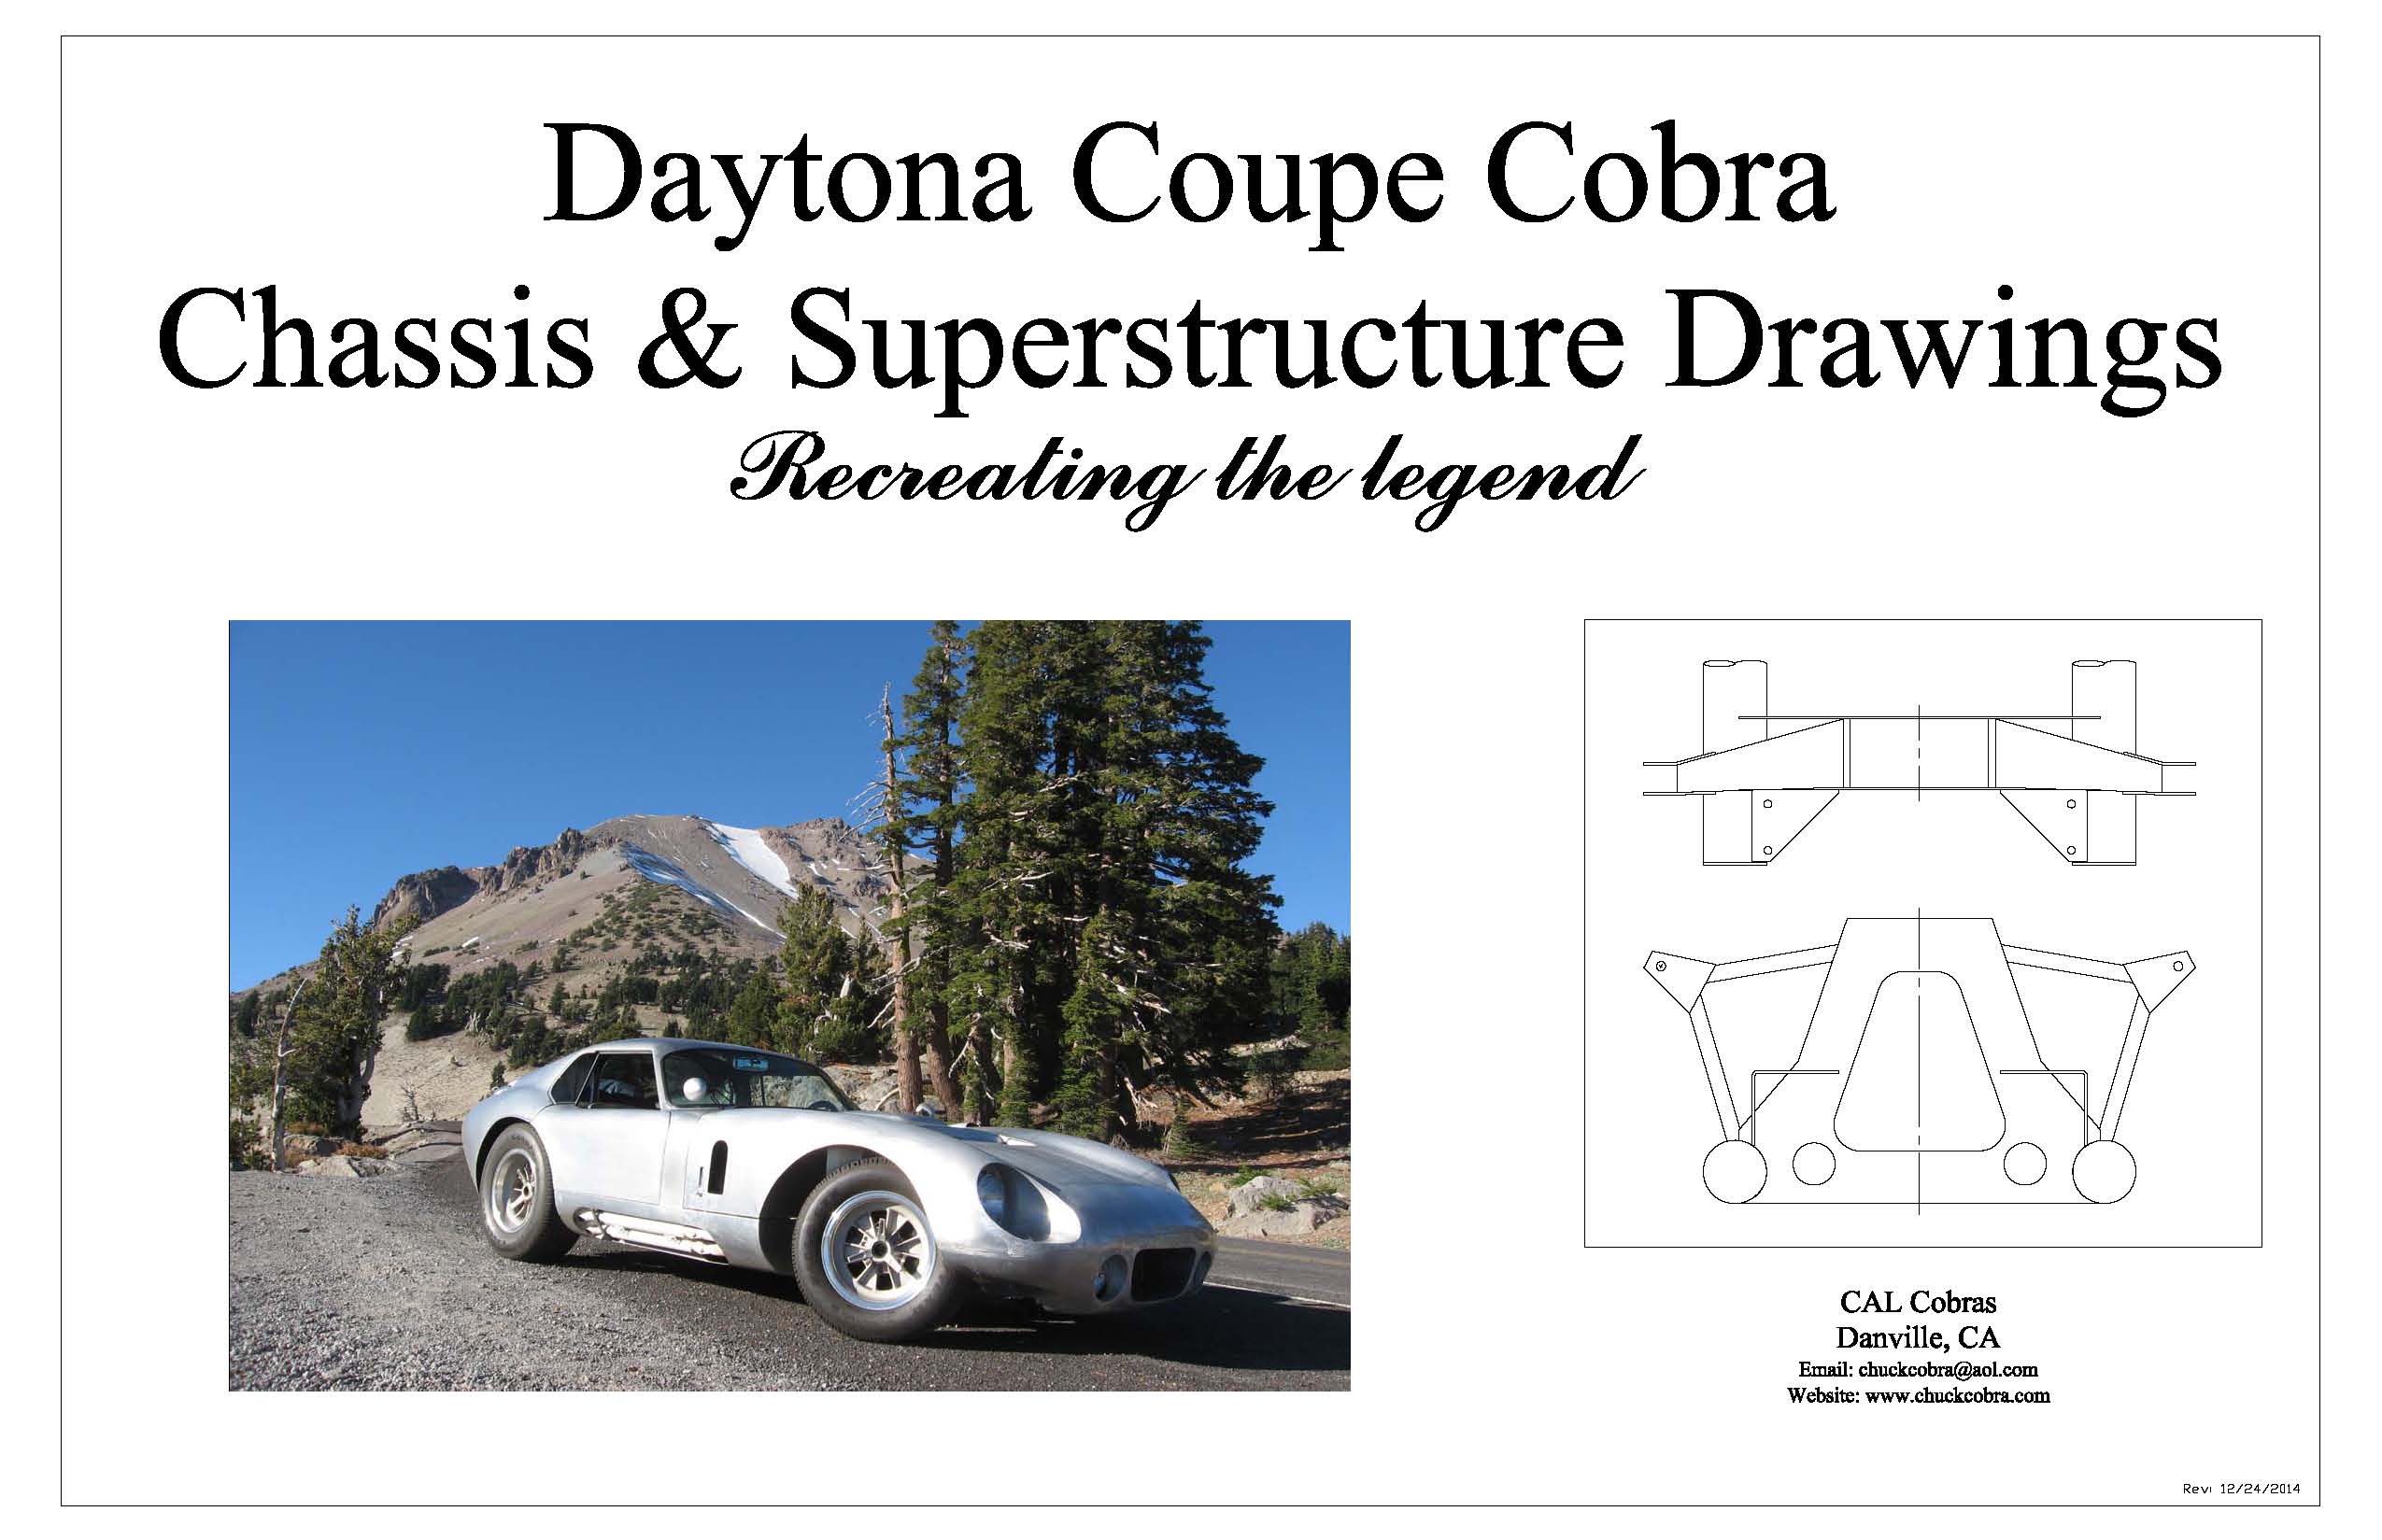 Daytona coupe cobra chassis drawings